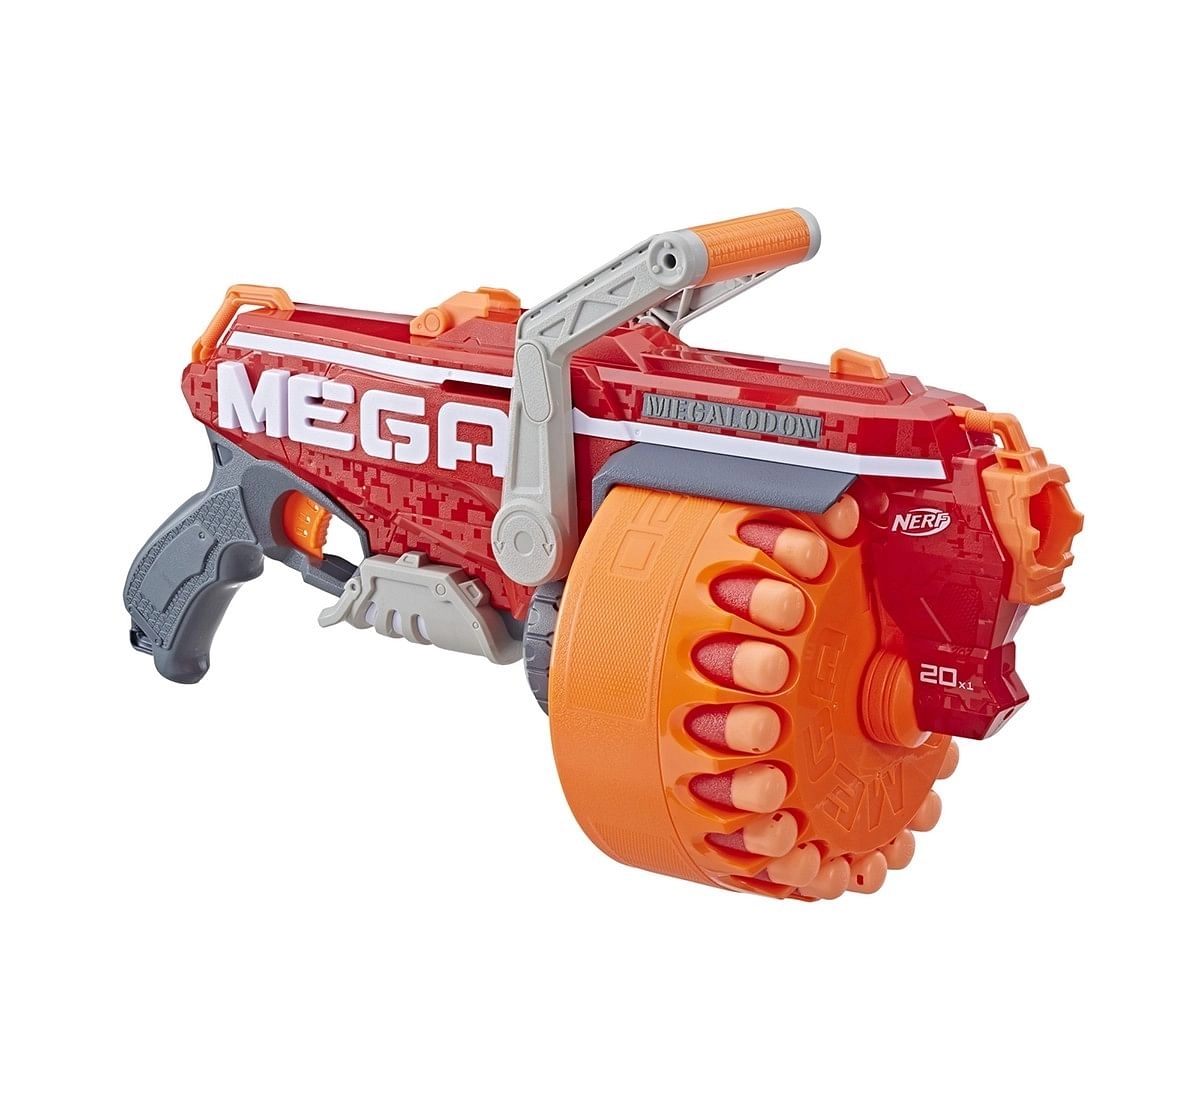 Nerf Megalodon N-Strike Mega Toy Blaster With 20 Official Mega Whistler Darts Blasters for Kids age 8Y+ 